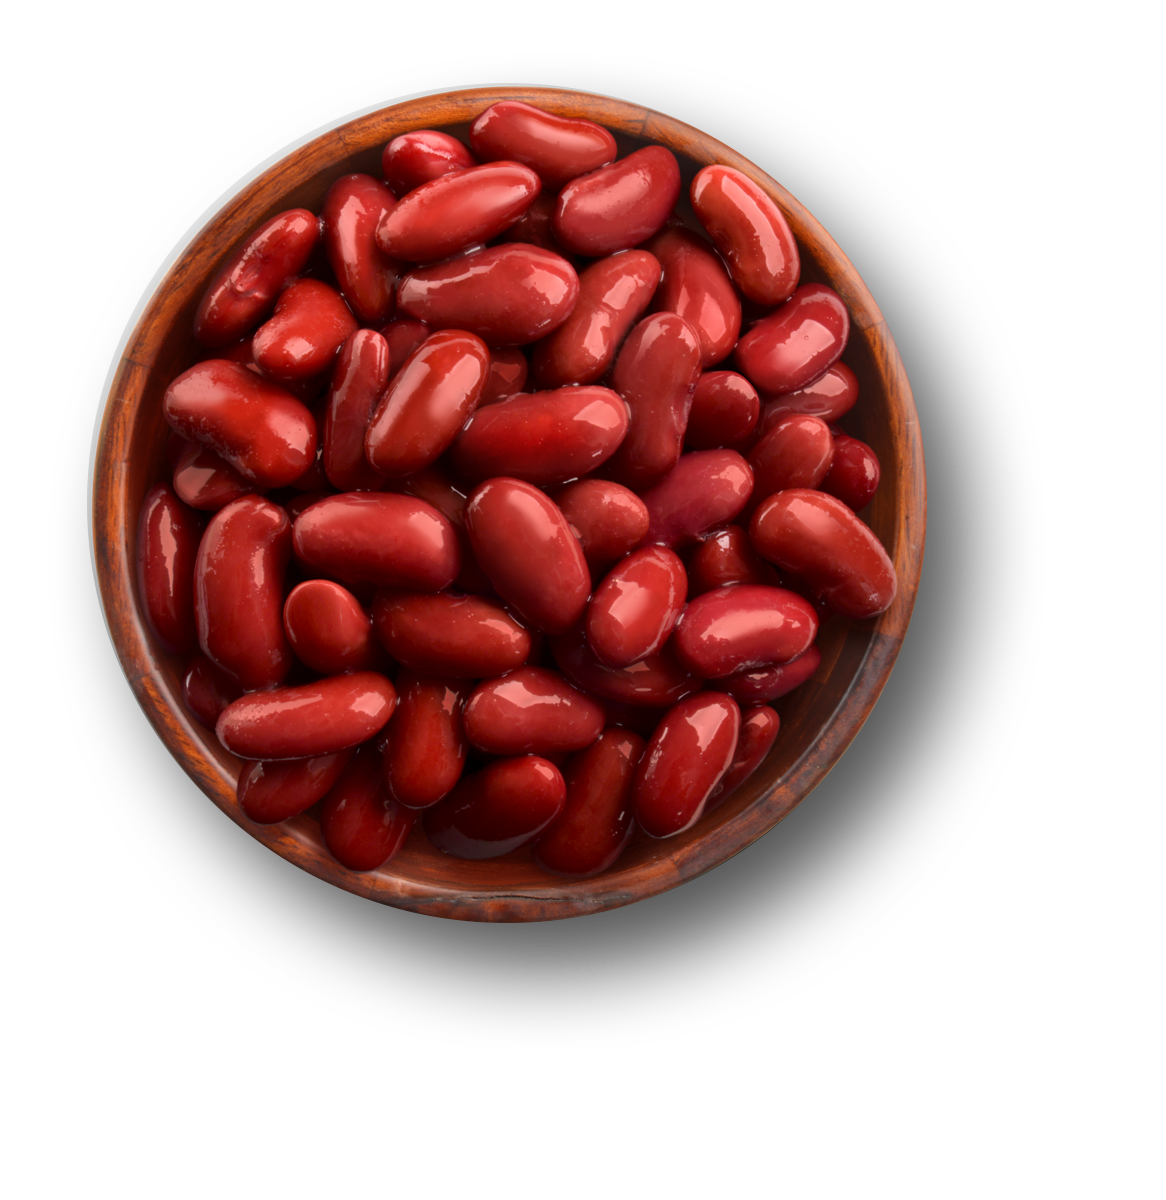 Bowl Beans Kidney Download Free Image PNG Image